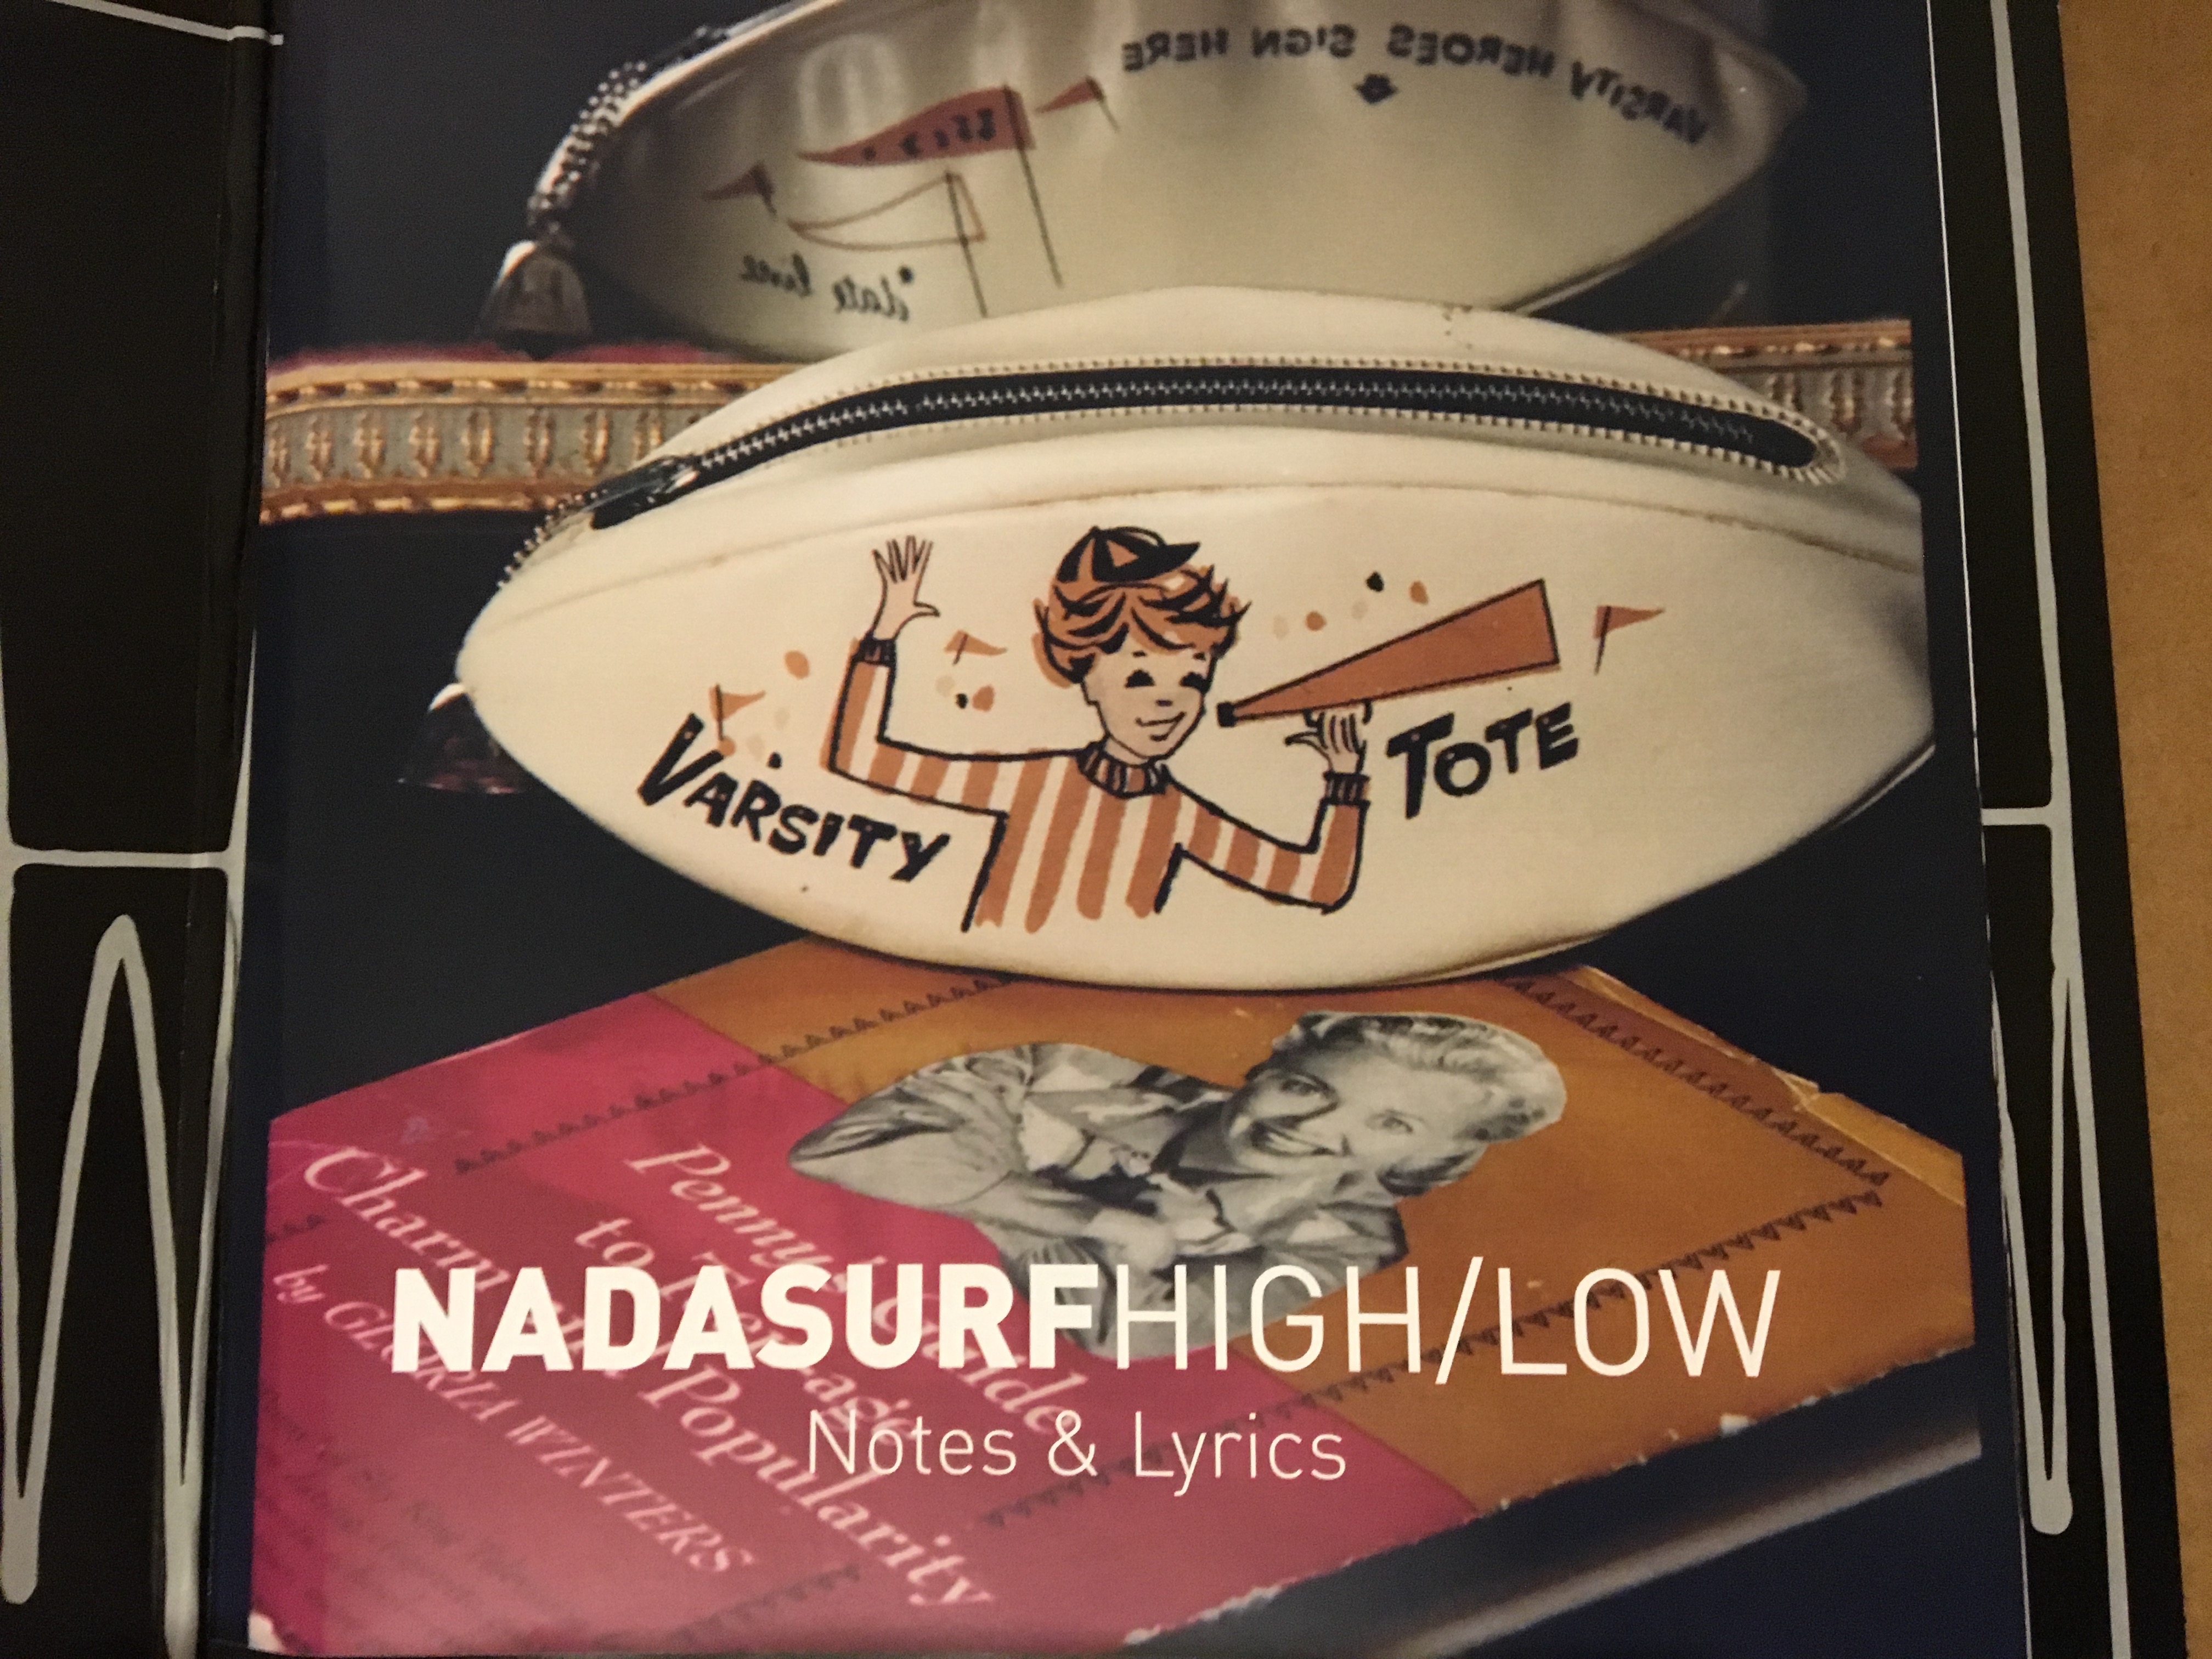 Nada surf, high/low, notes & lyrics